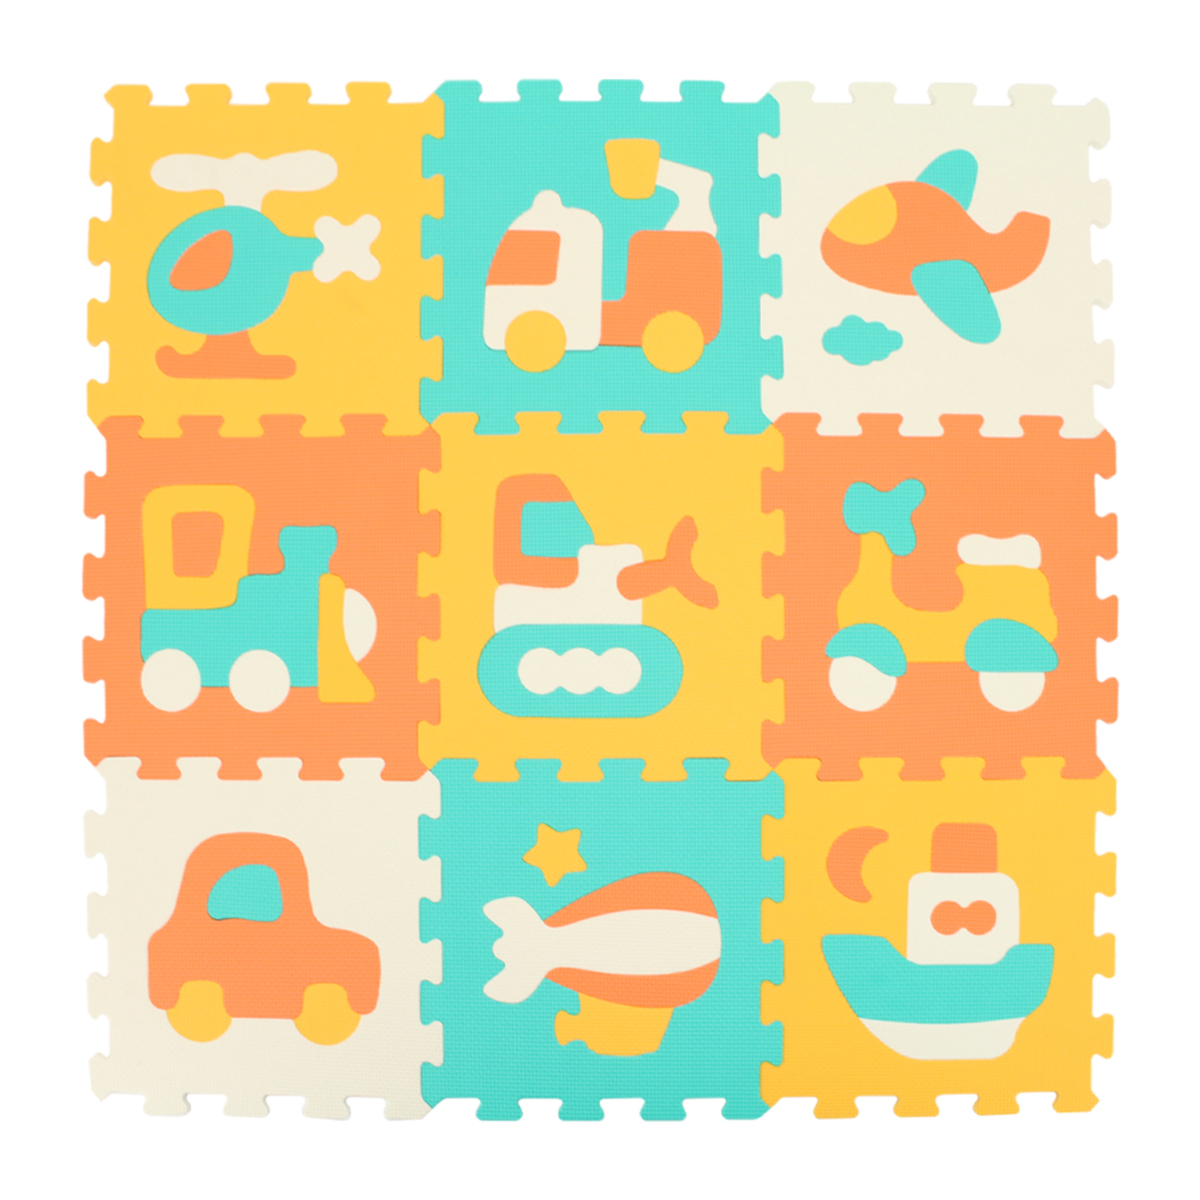 Sunta Puzzle Mat, Pack of 9, Multicolor, 5513N/9-E